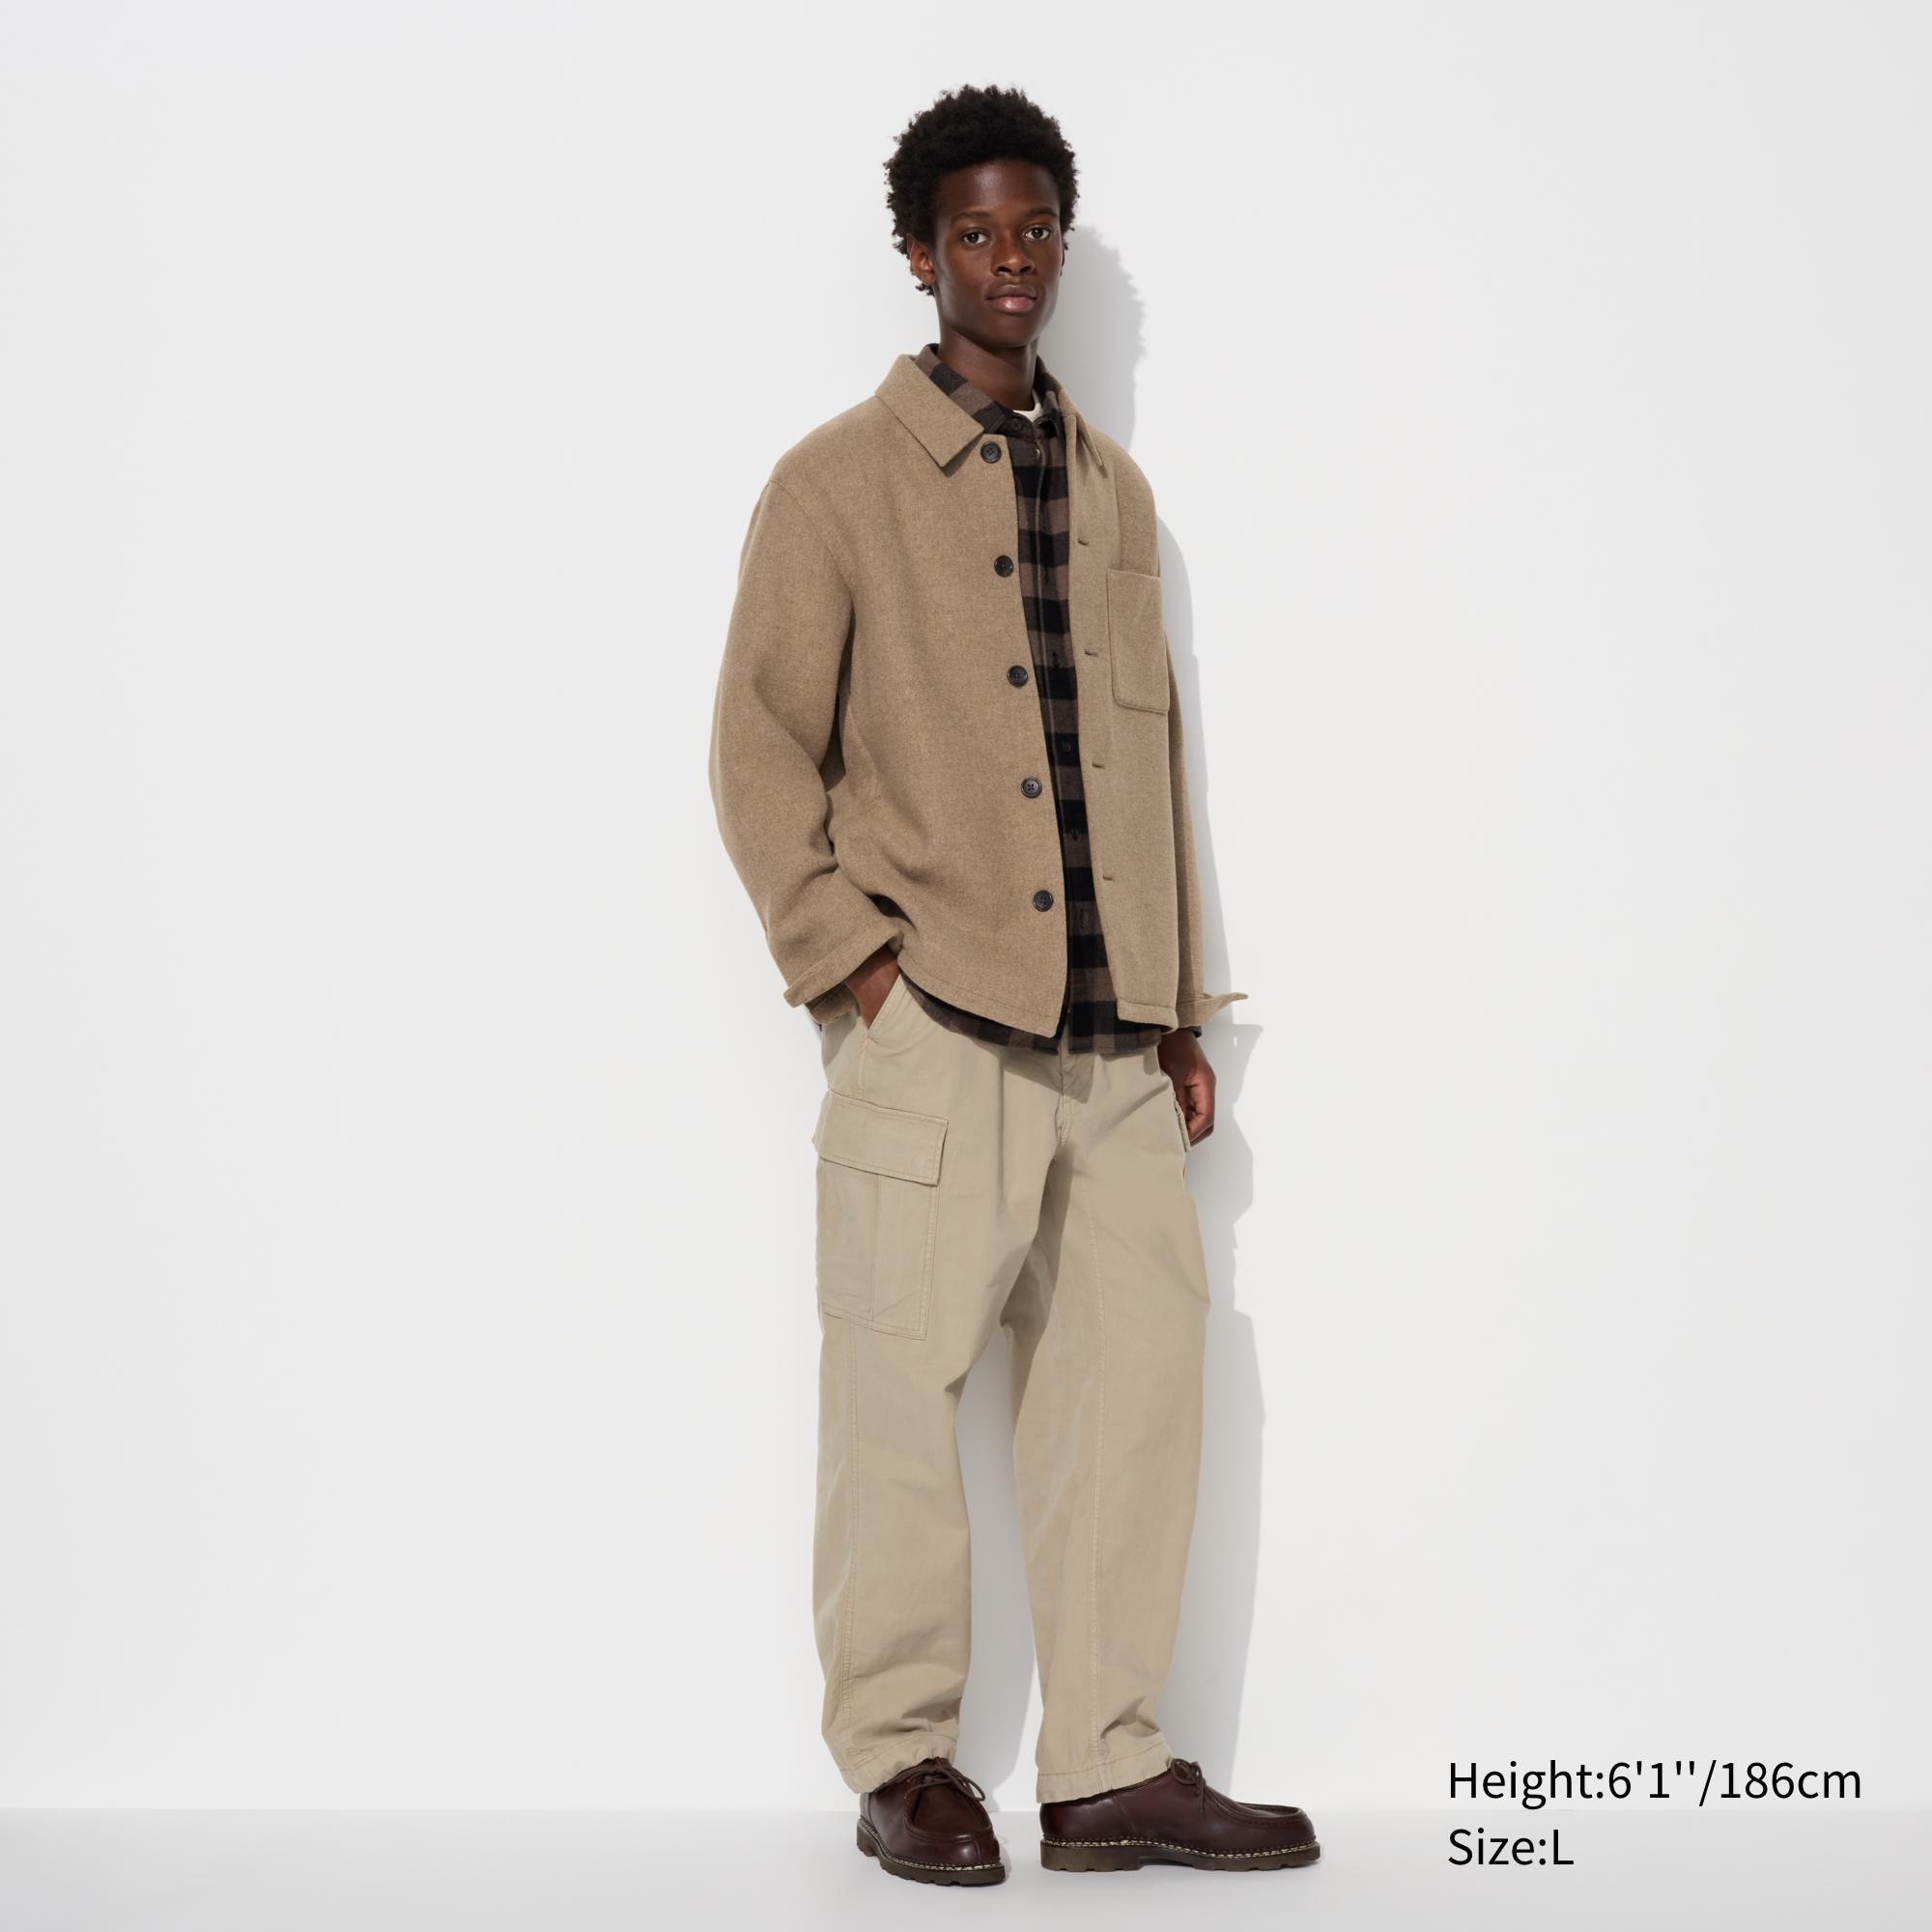 Skinny Fit Cargo trousers - Dark grey - Men | H&M IN